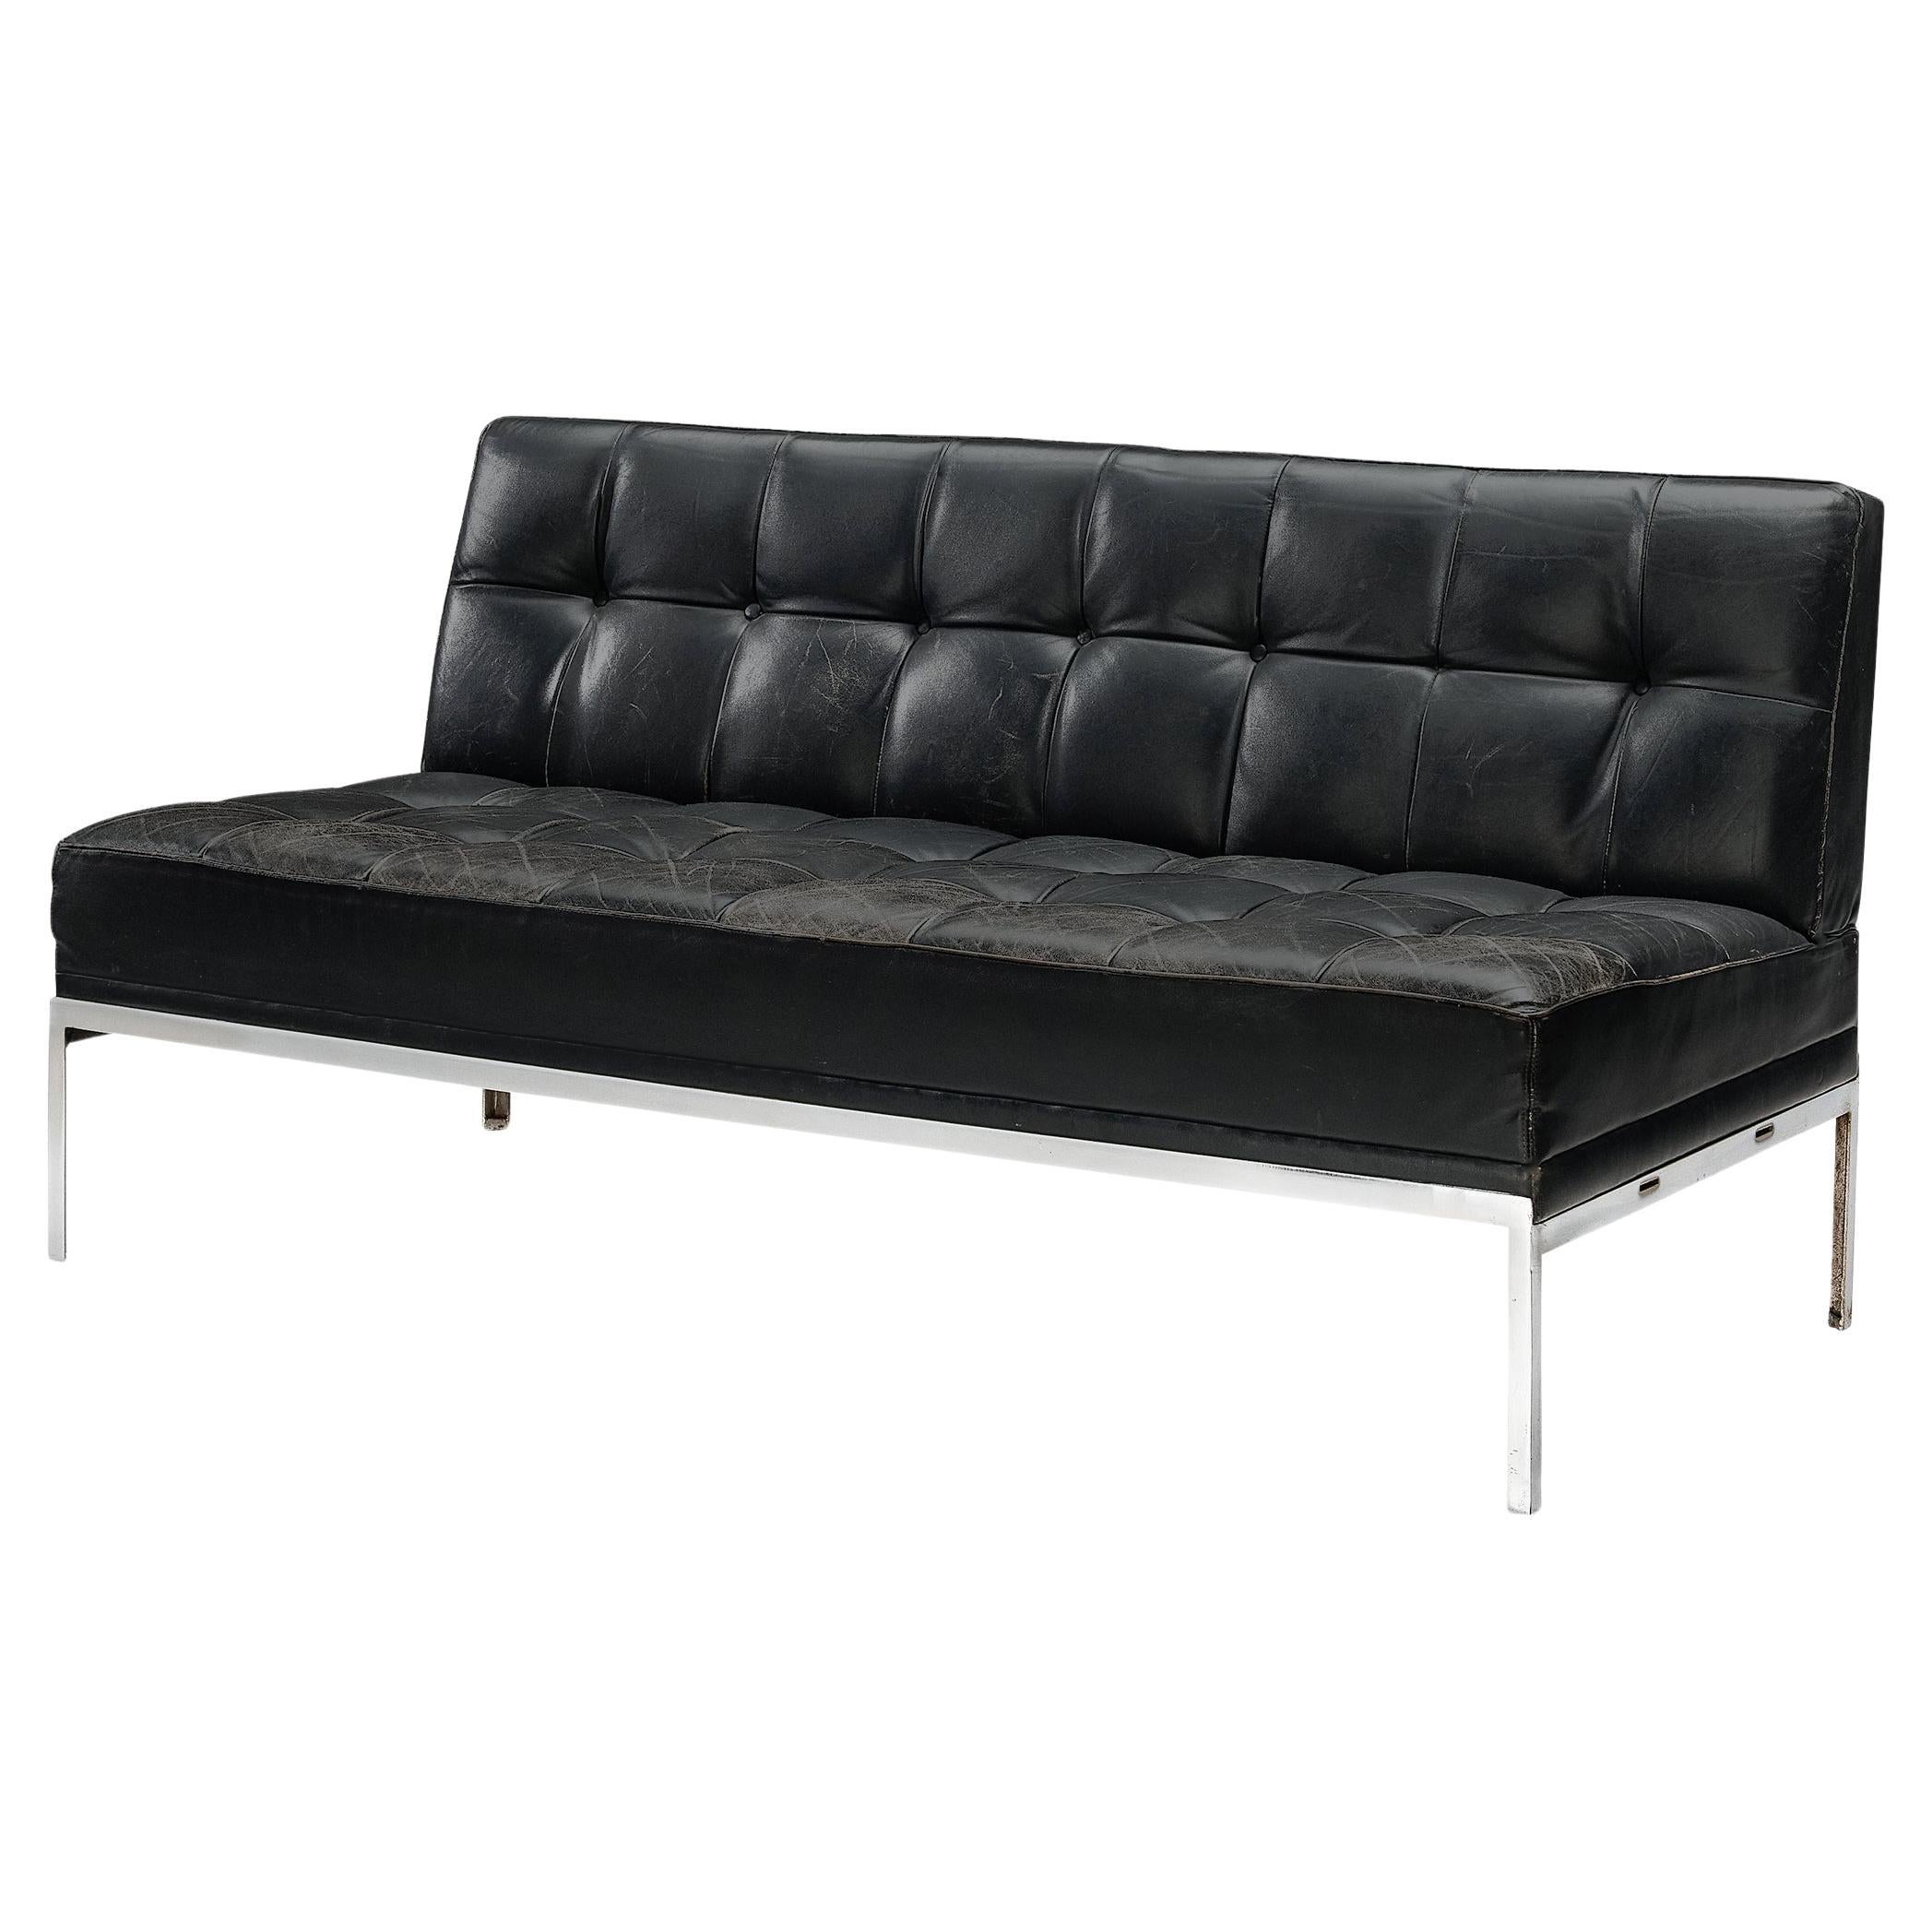 Johannes Spalt for Wittmann Sofa in Black Leather For Sale